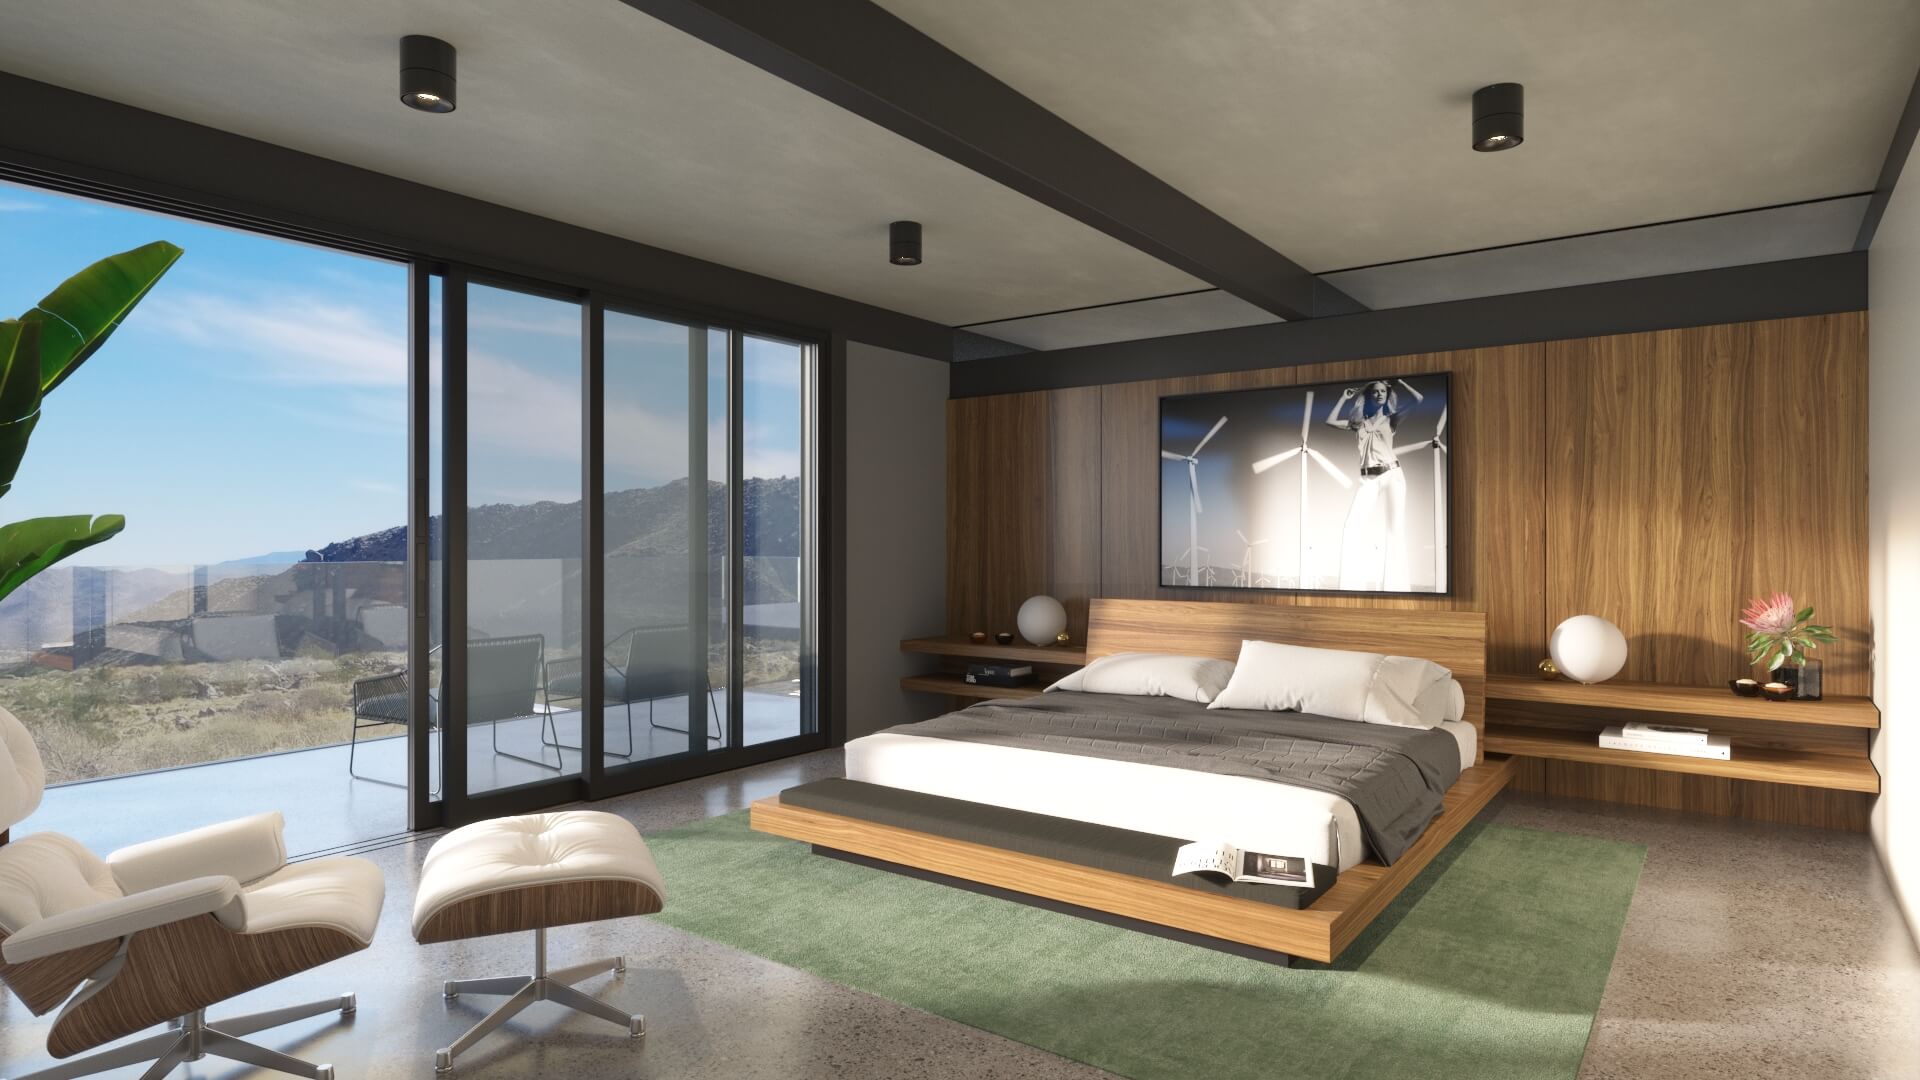 Interior rendering of a bedroom